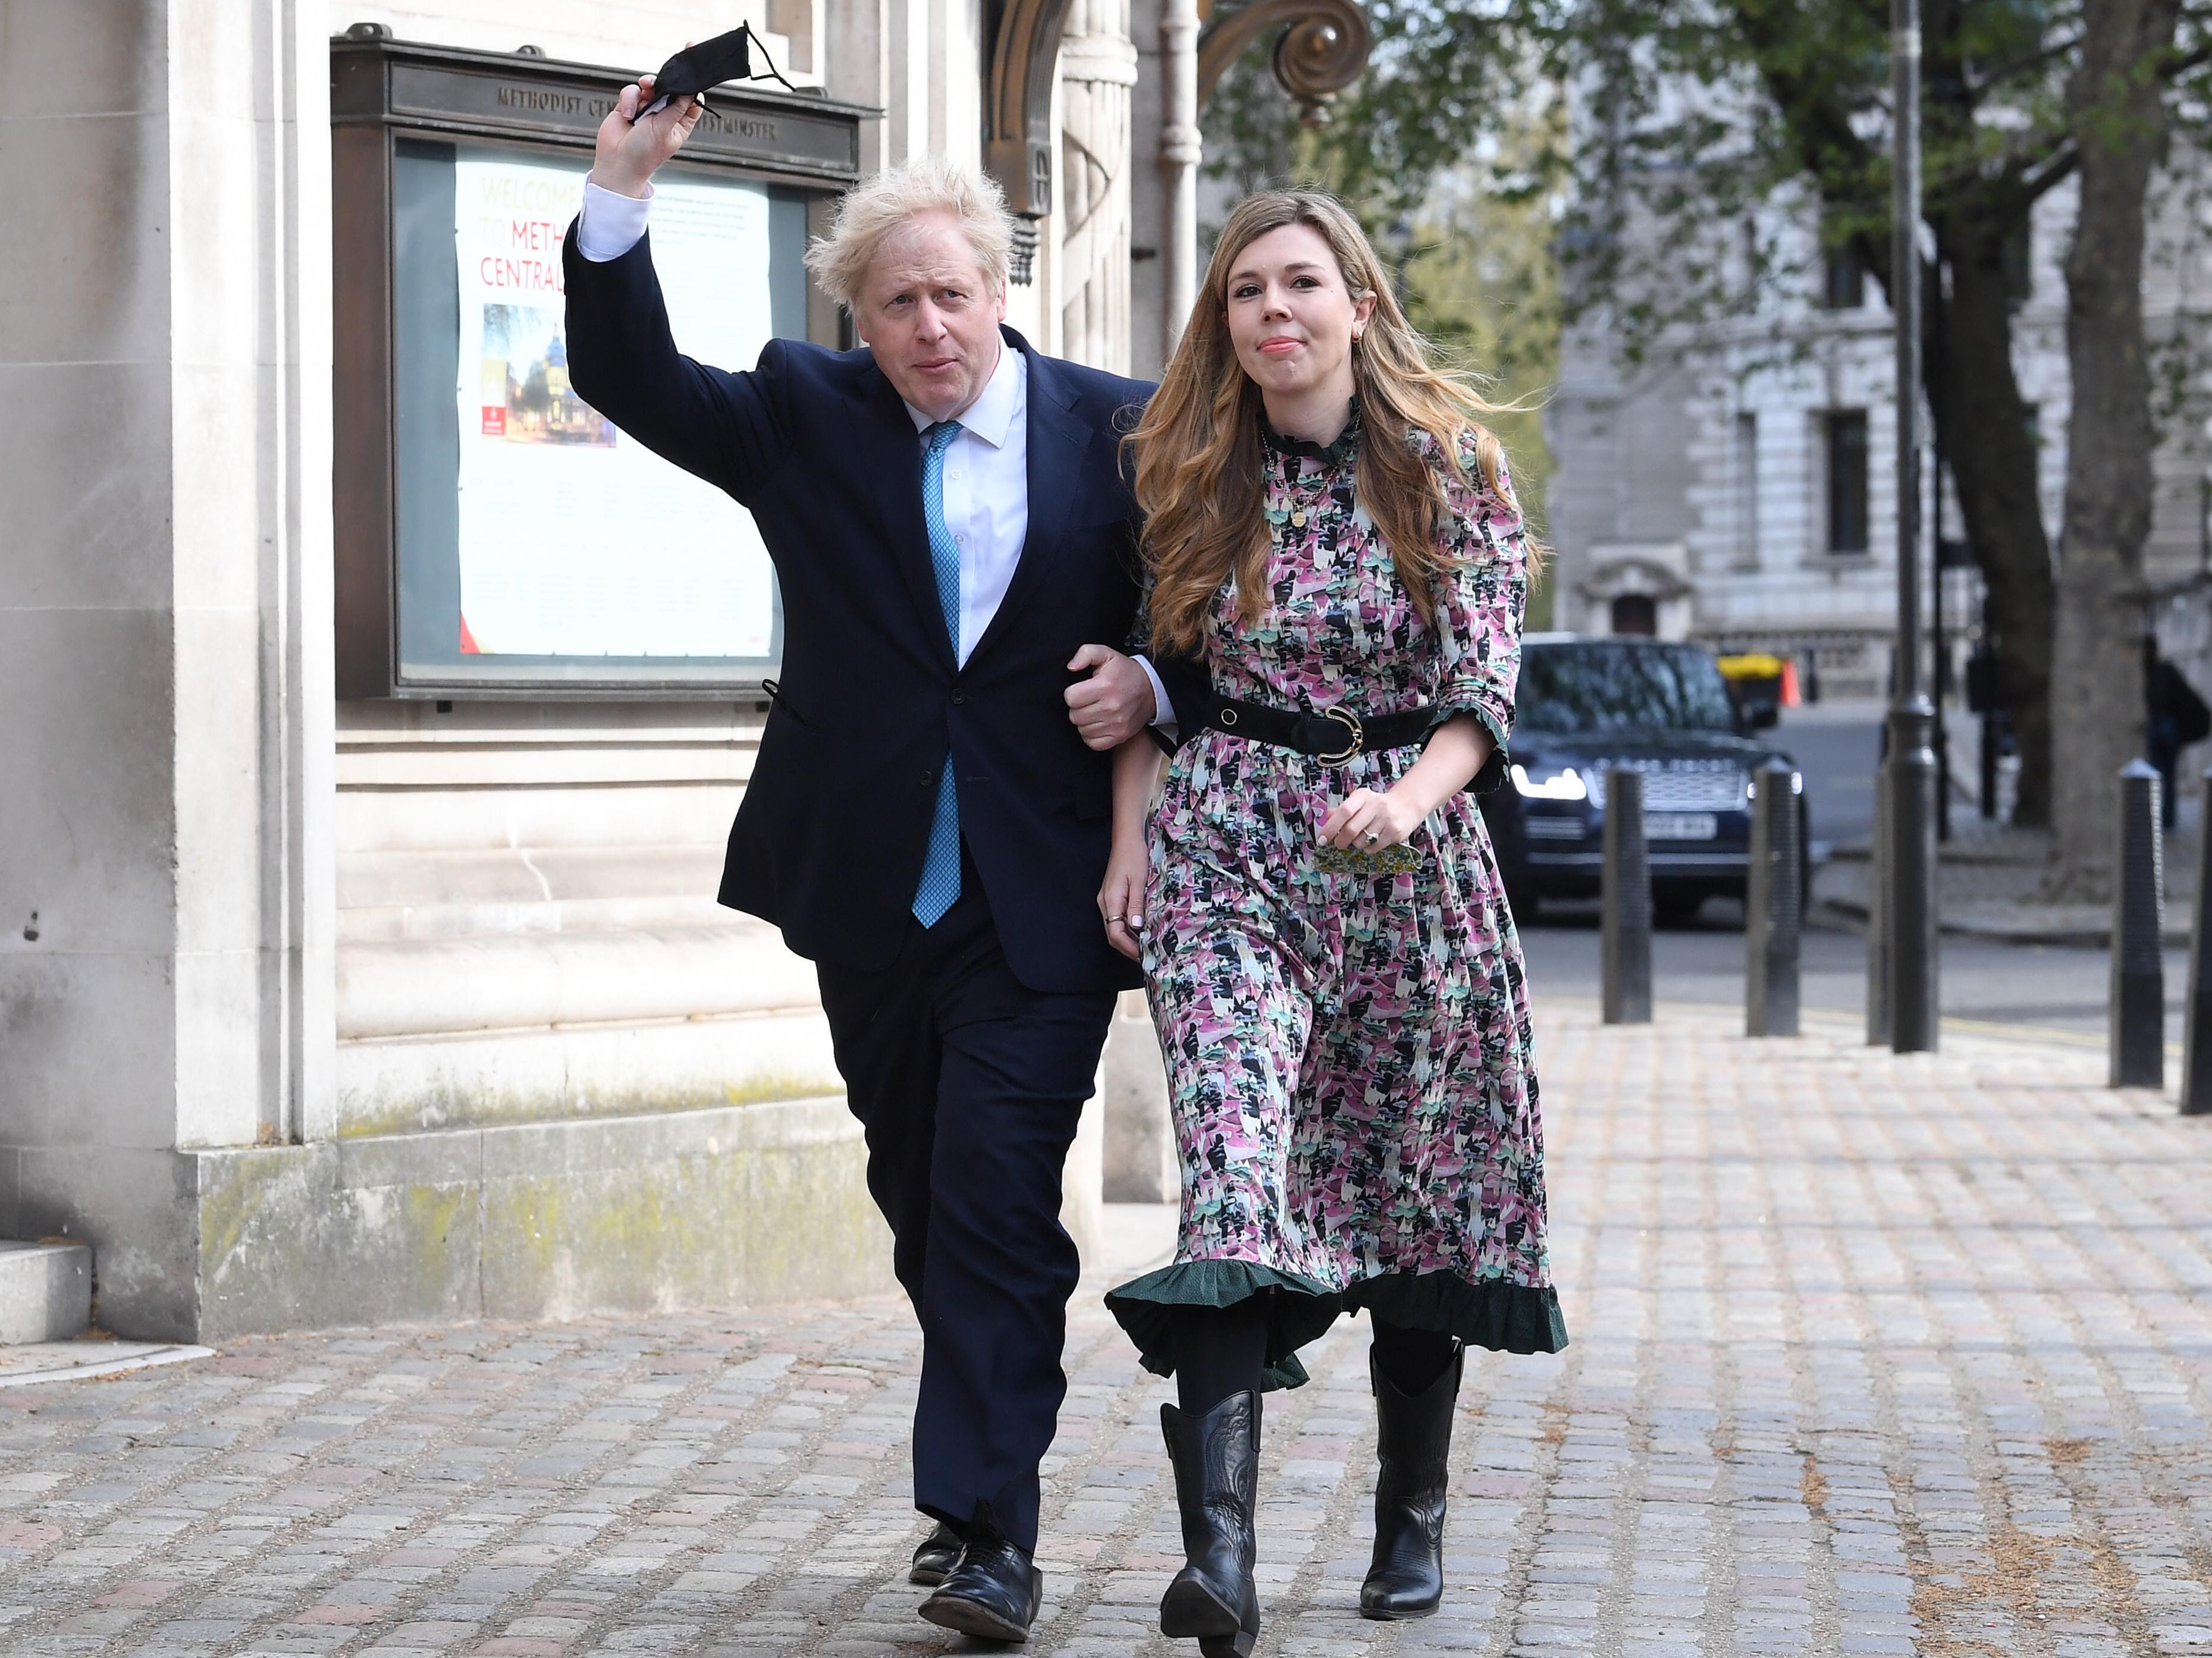 Boris Johnson and his fiancee Carrie Symonds